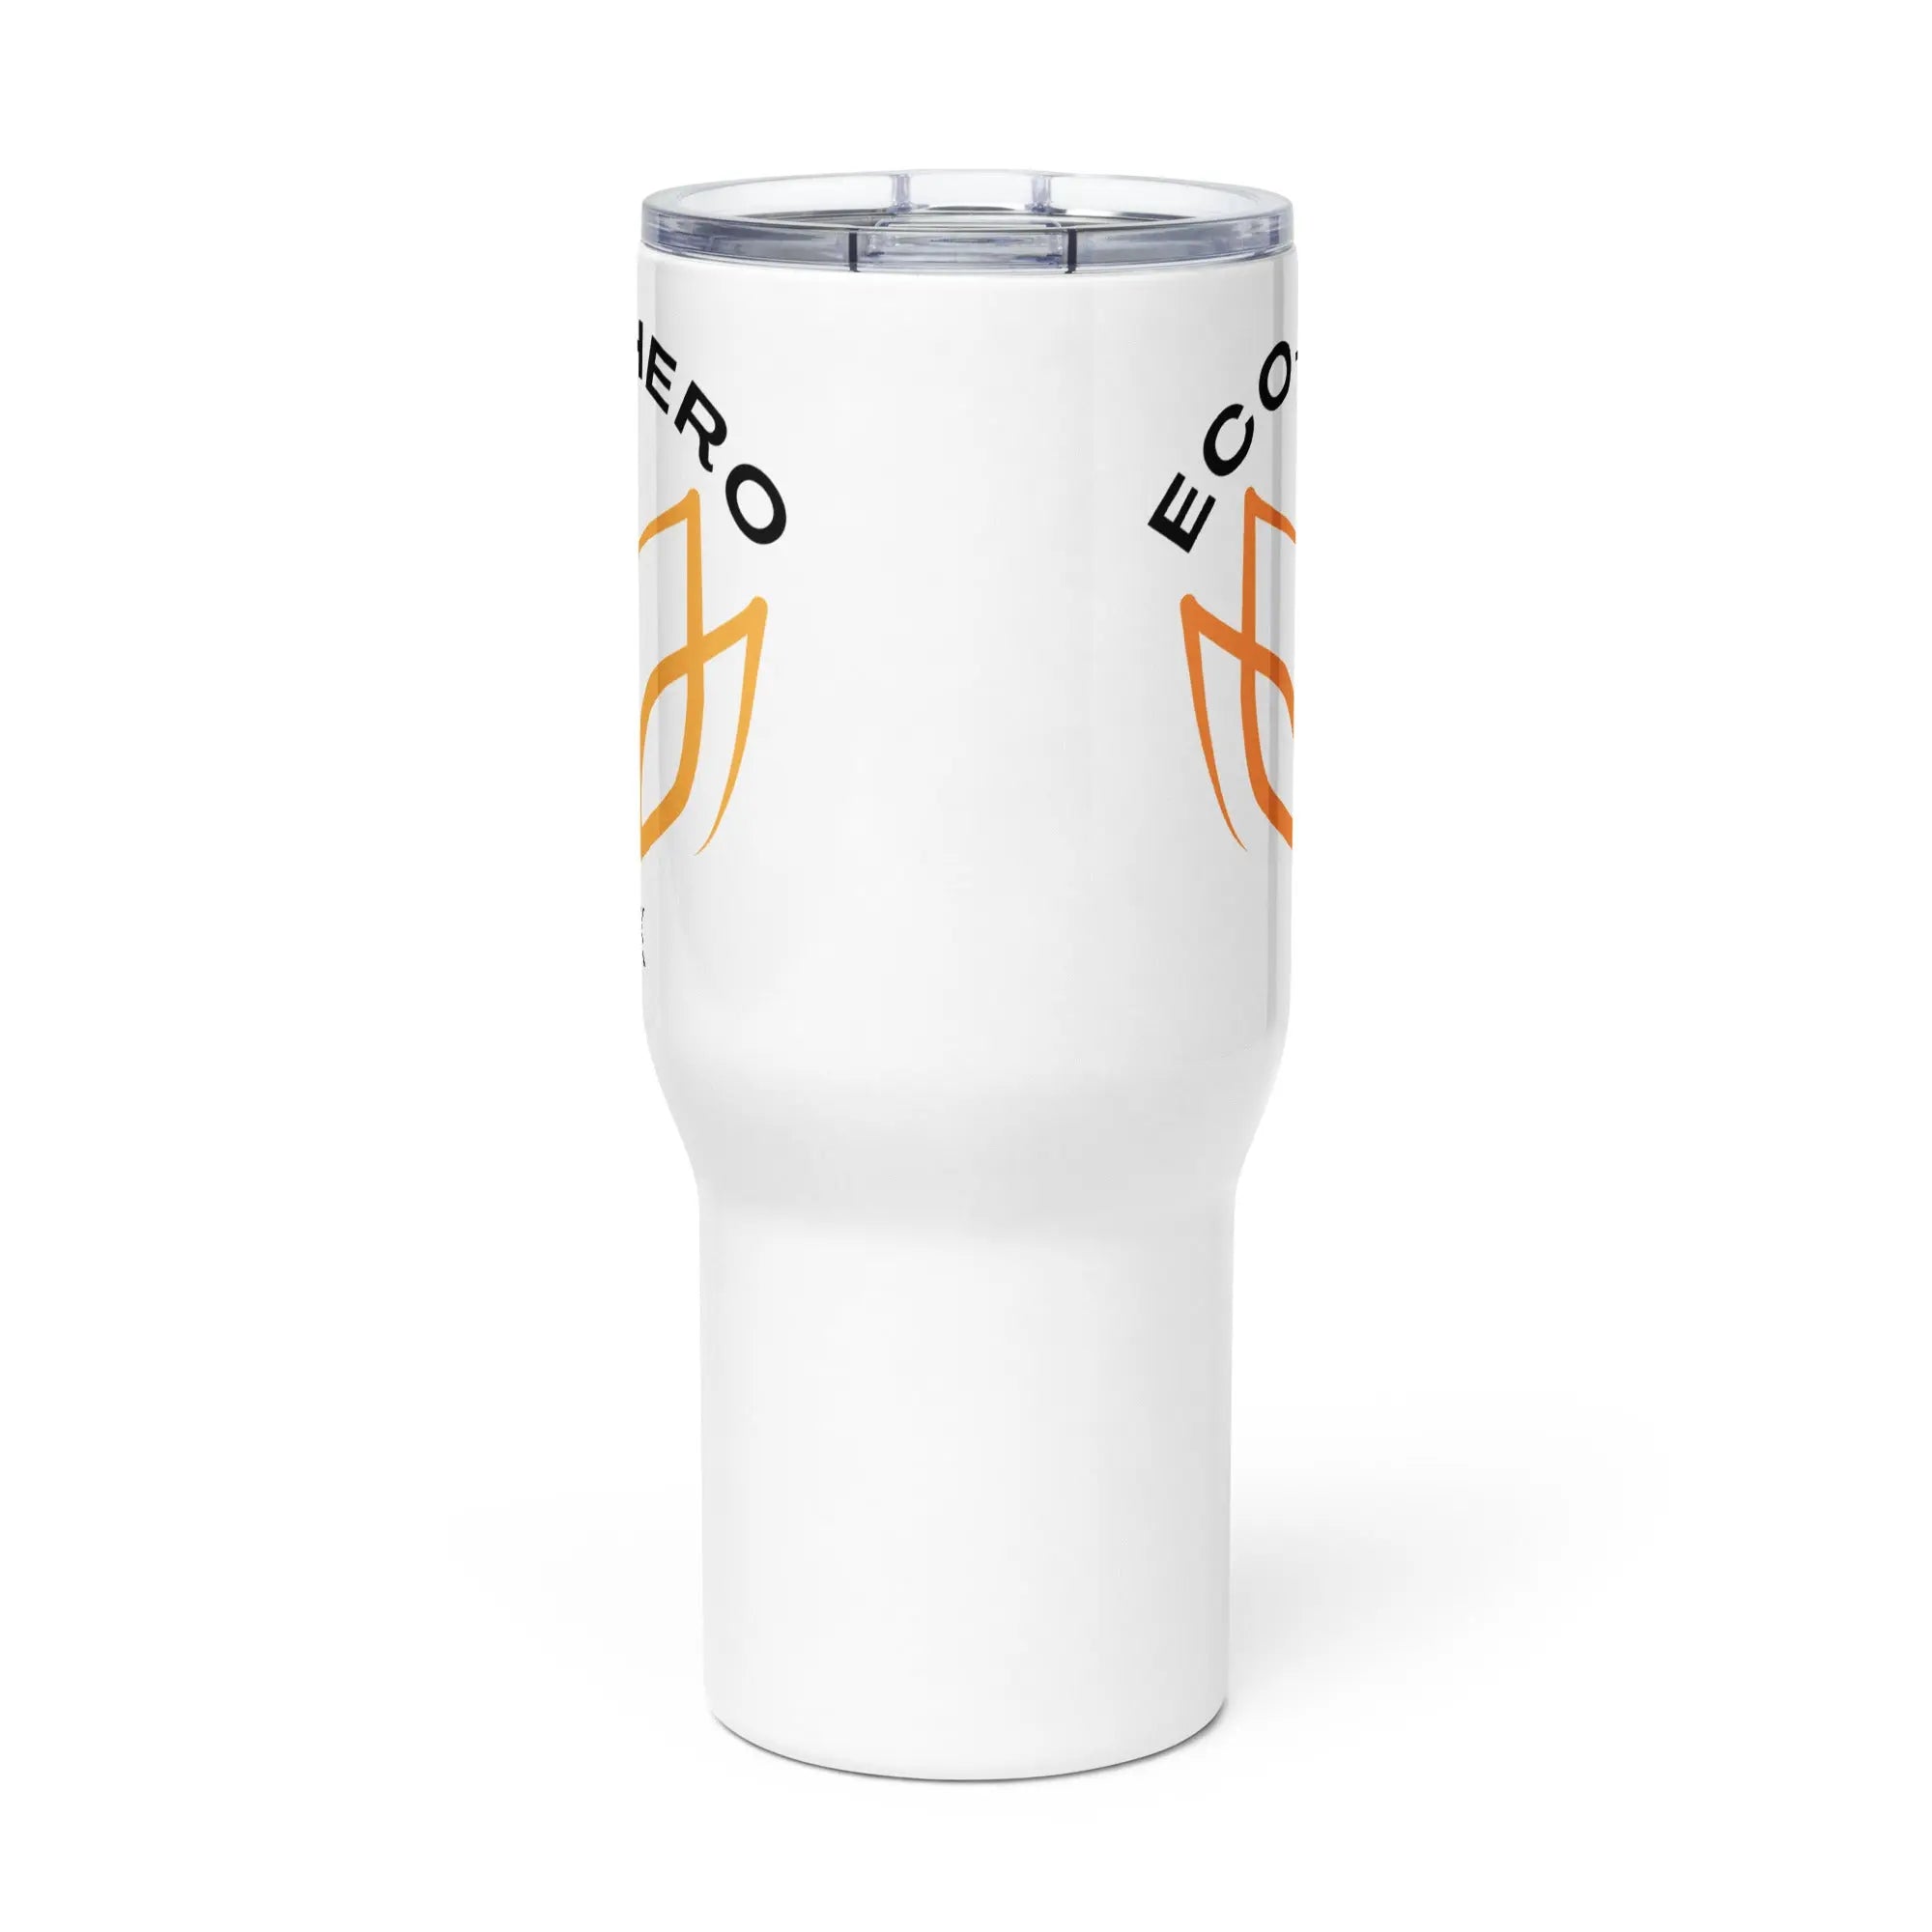 Eco Hero | Travel mug with a handle GeorgeKenny Design